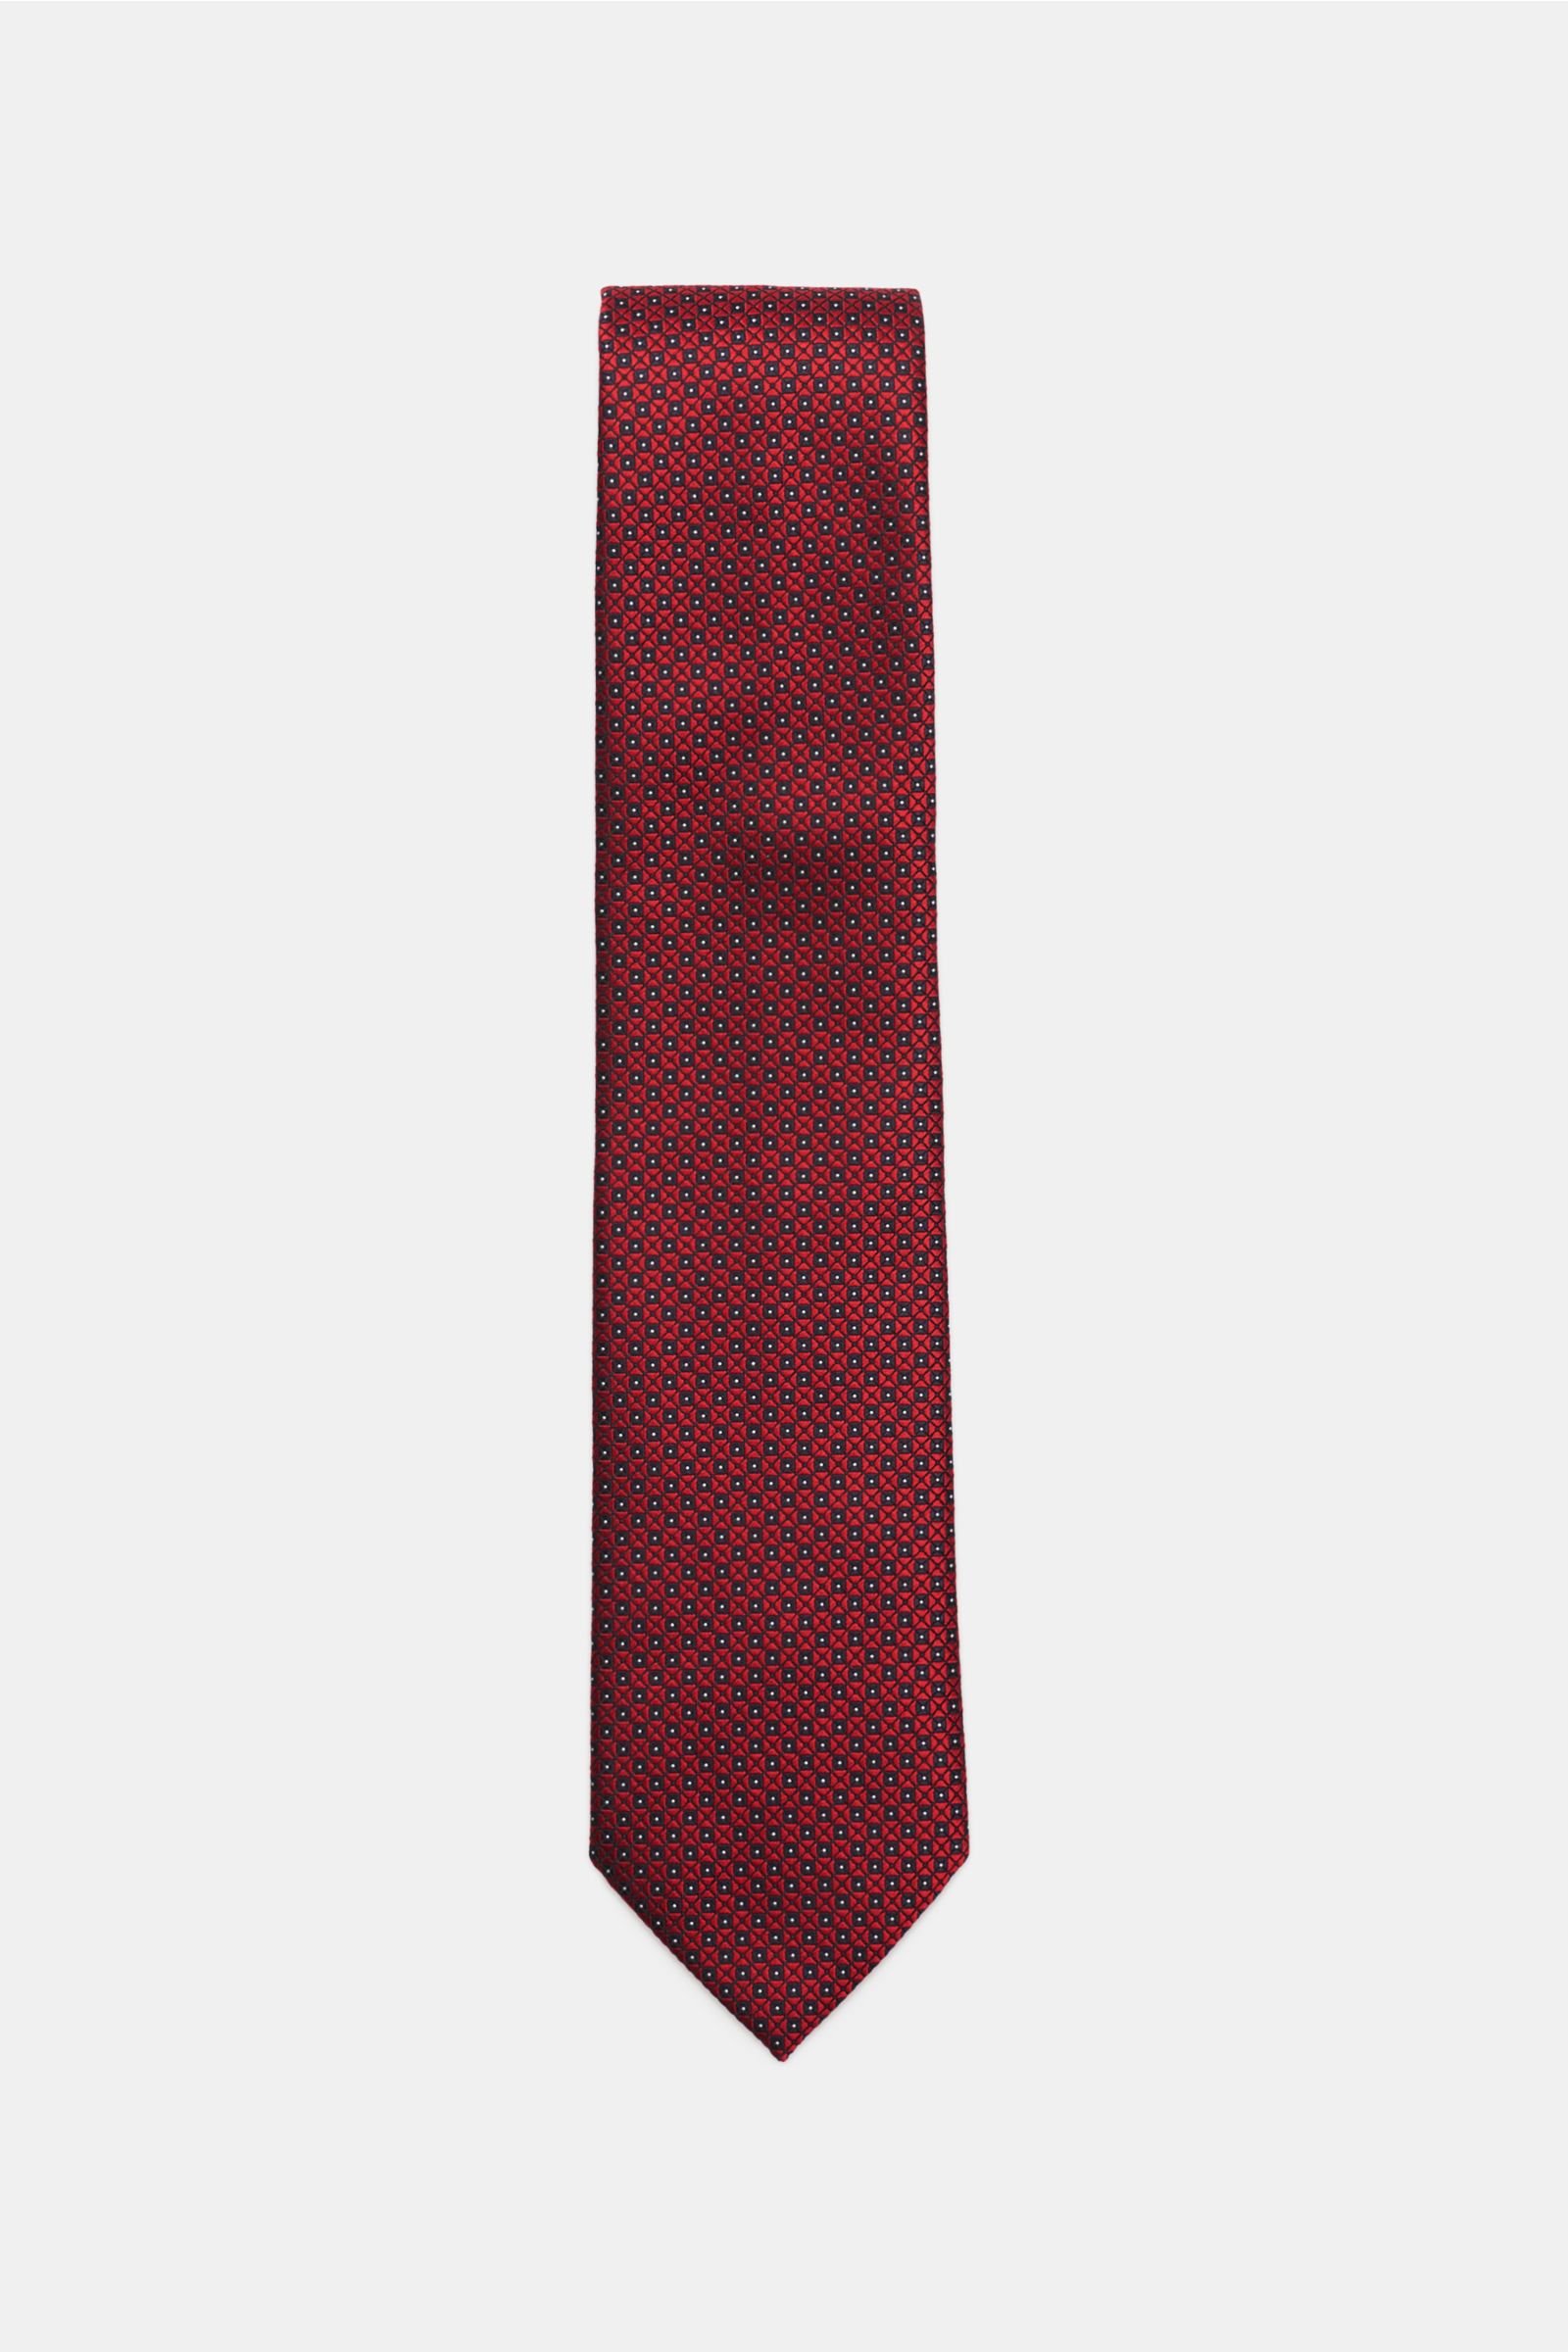 Silk tie dark red/black patterned